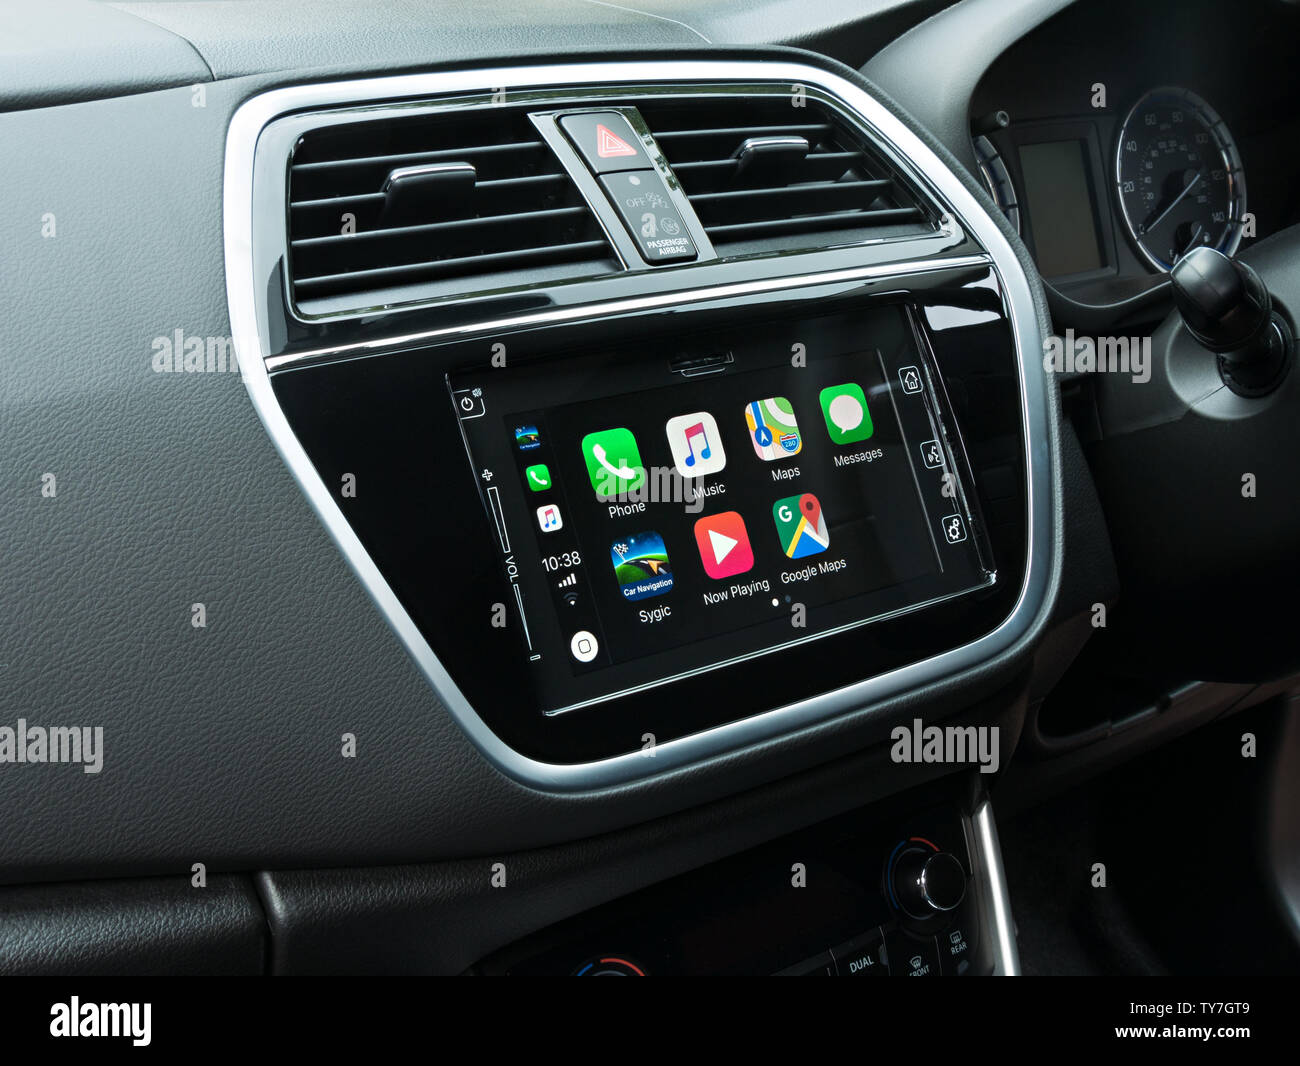 DoorDash Launches Apple CarPlay Integration for Dasher App